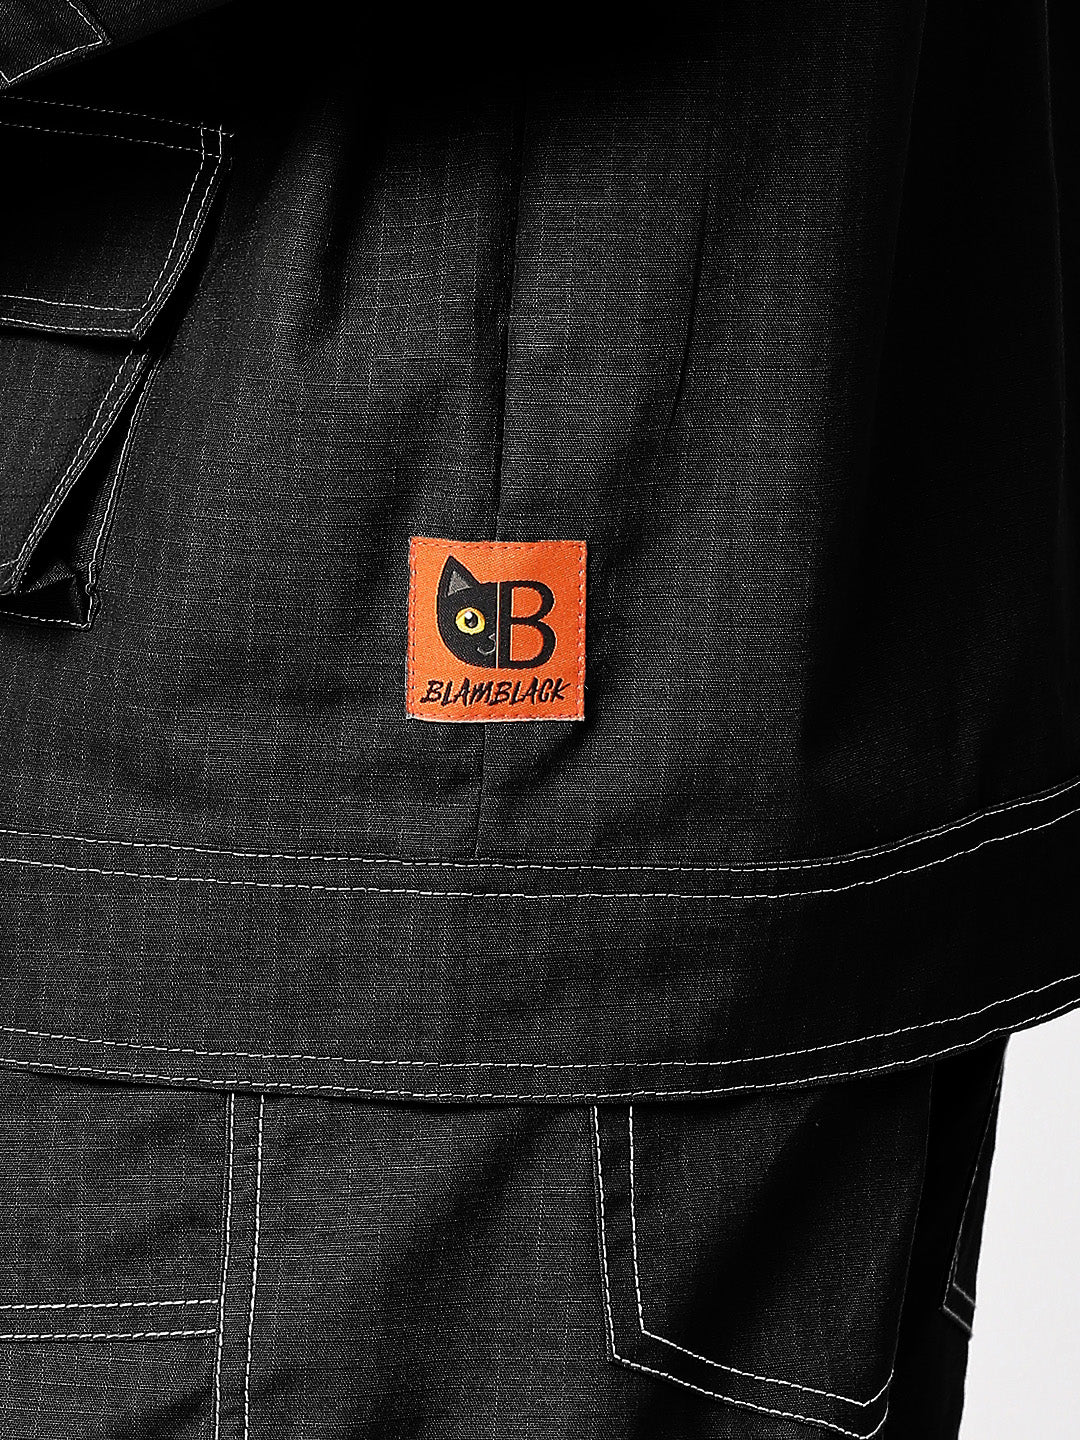 BLAMBLACK Men's Cargo Style Jacket With Pant Black Color Co-Ord Set